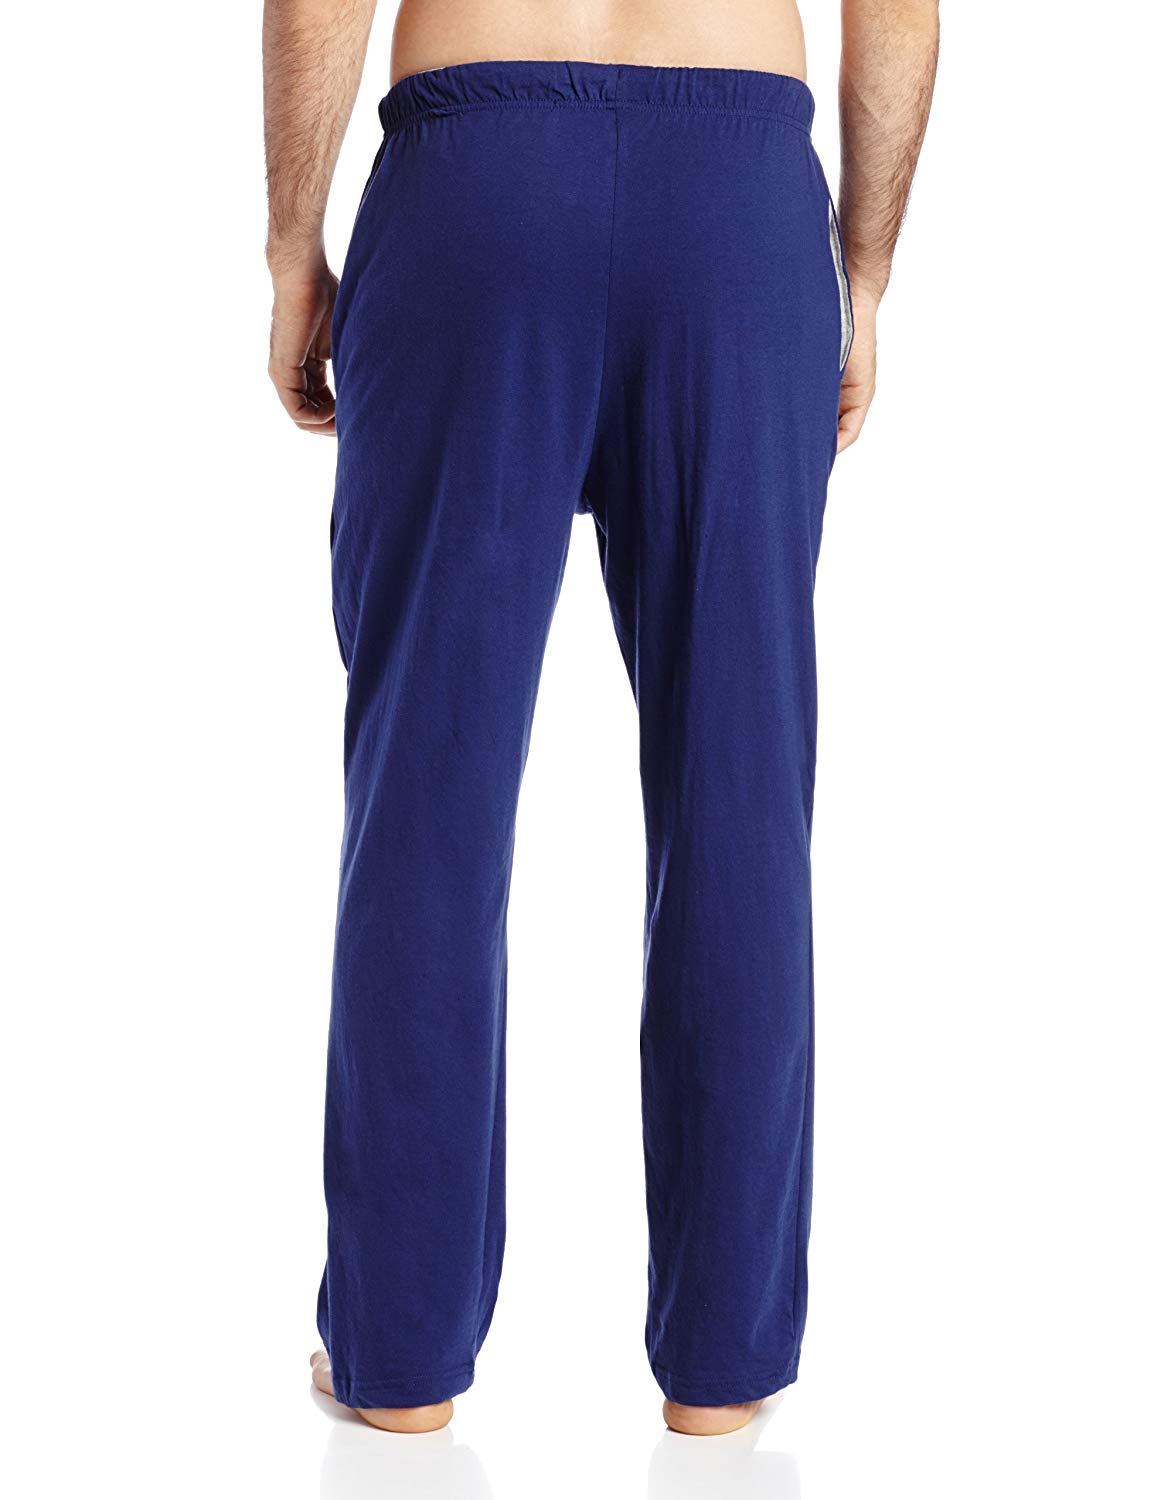 Hanes Men's Solid Knit Sleep Pant, Blue, Large, Blue, Size Large fEFc ...